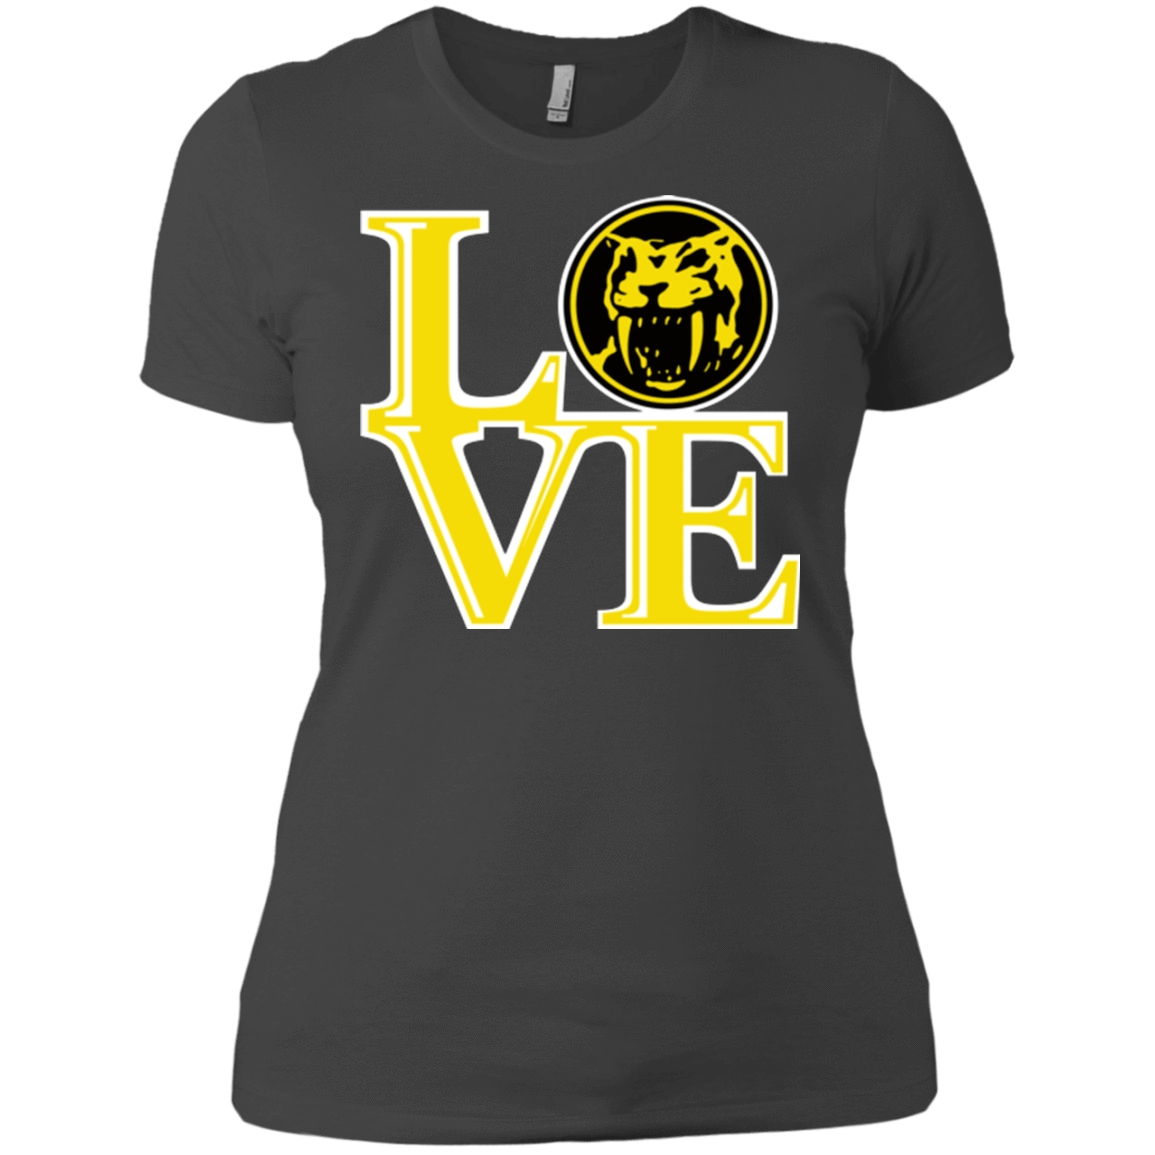 T-Shirts Heavy Metal / X-Small Yellow Ranger LOVE Women's Premium T-Shirt